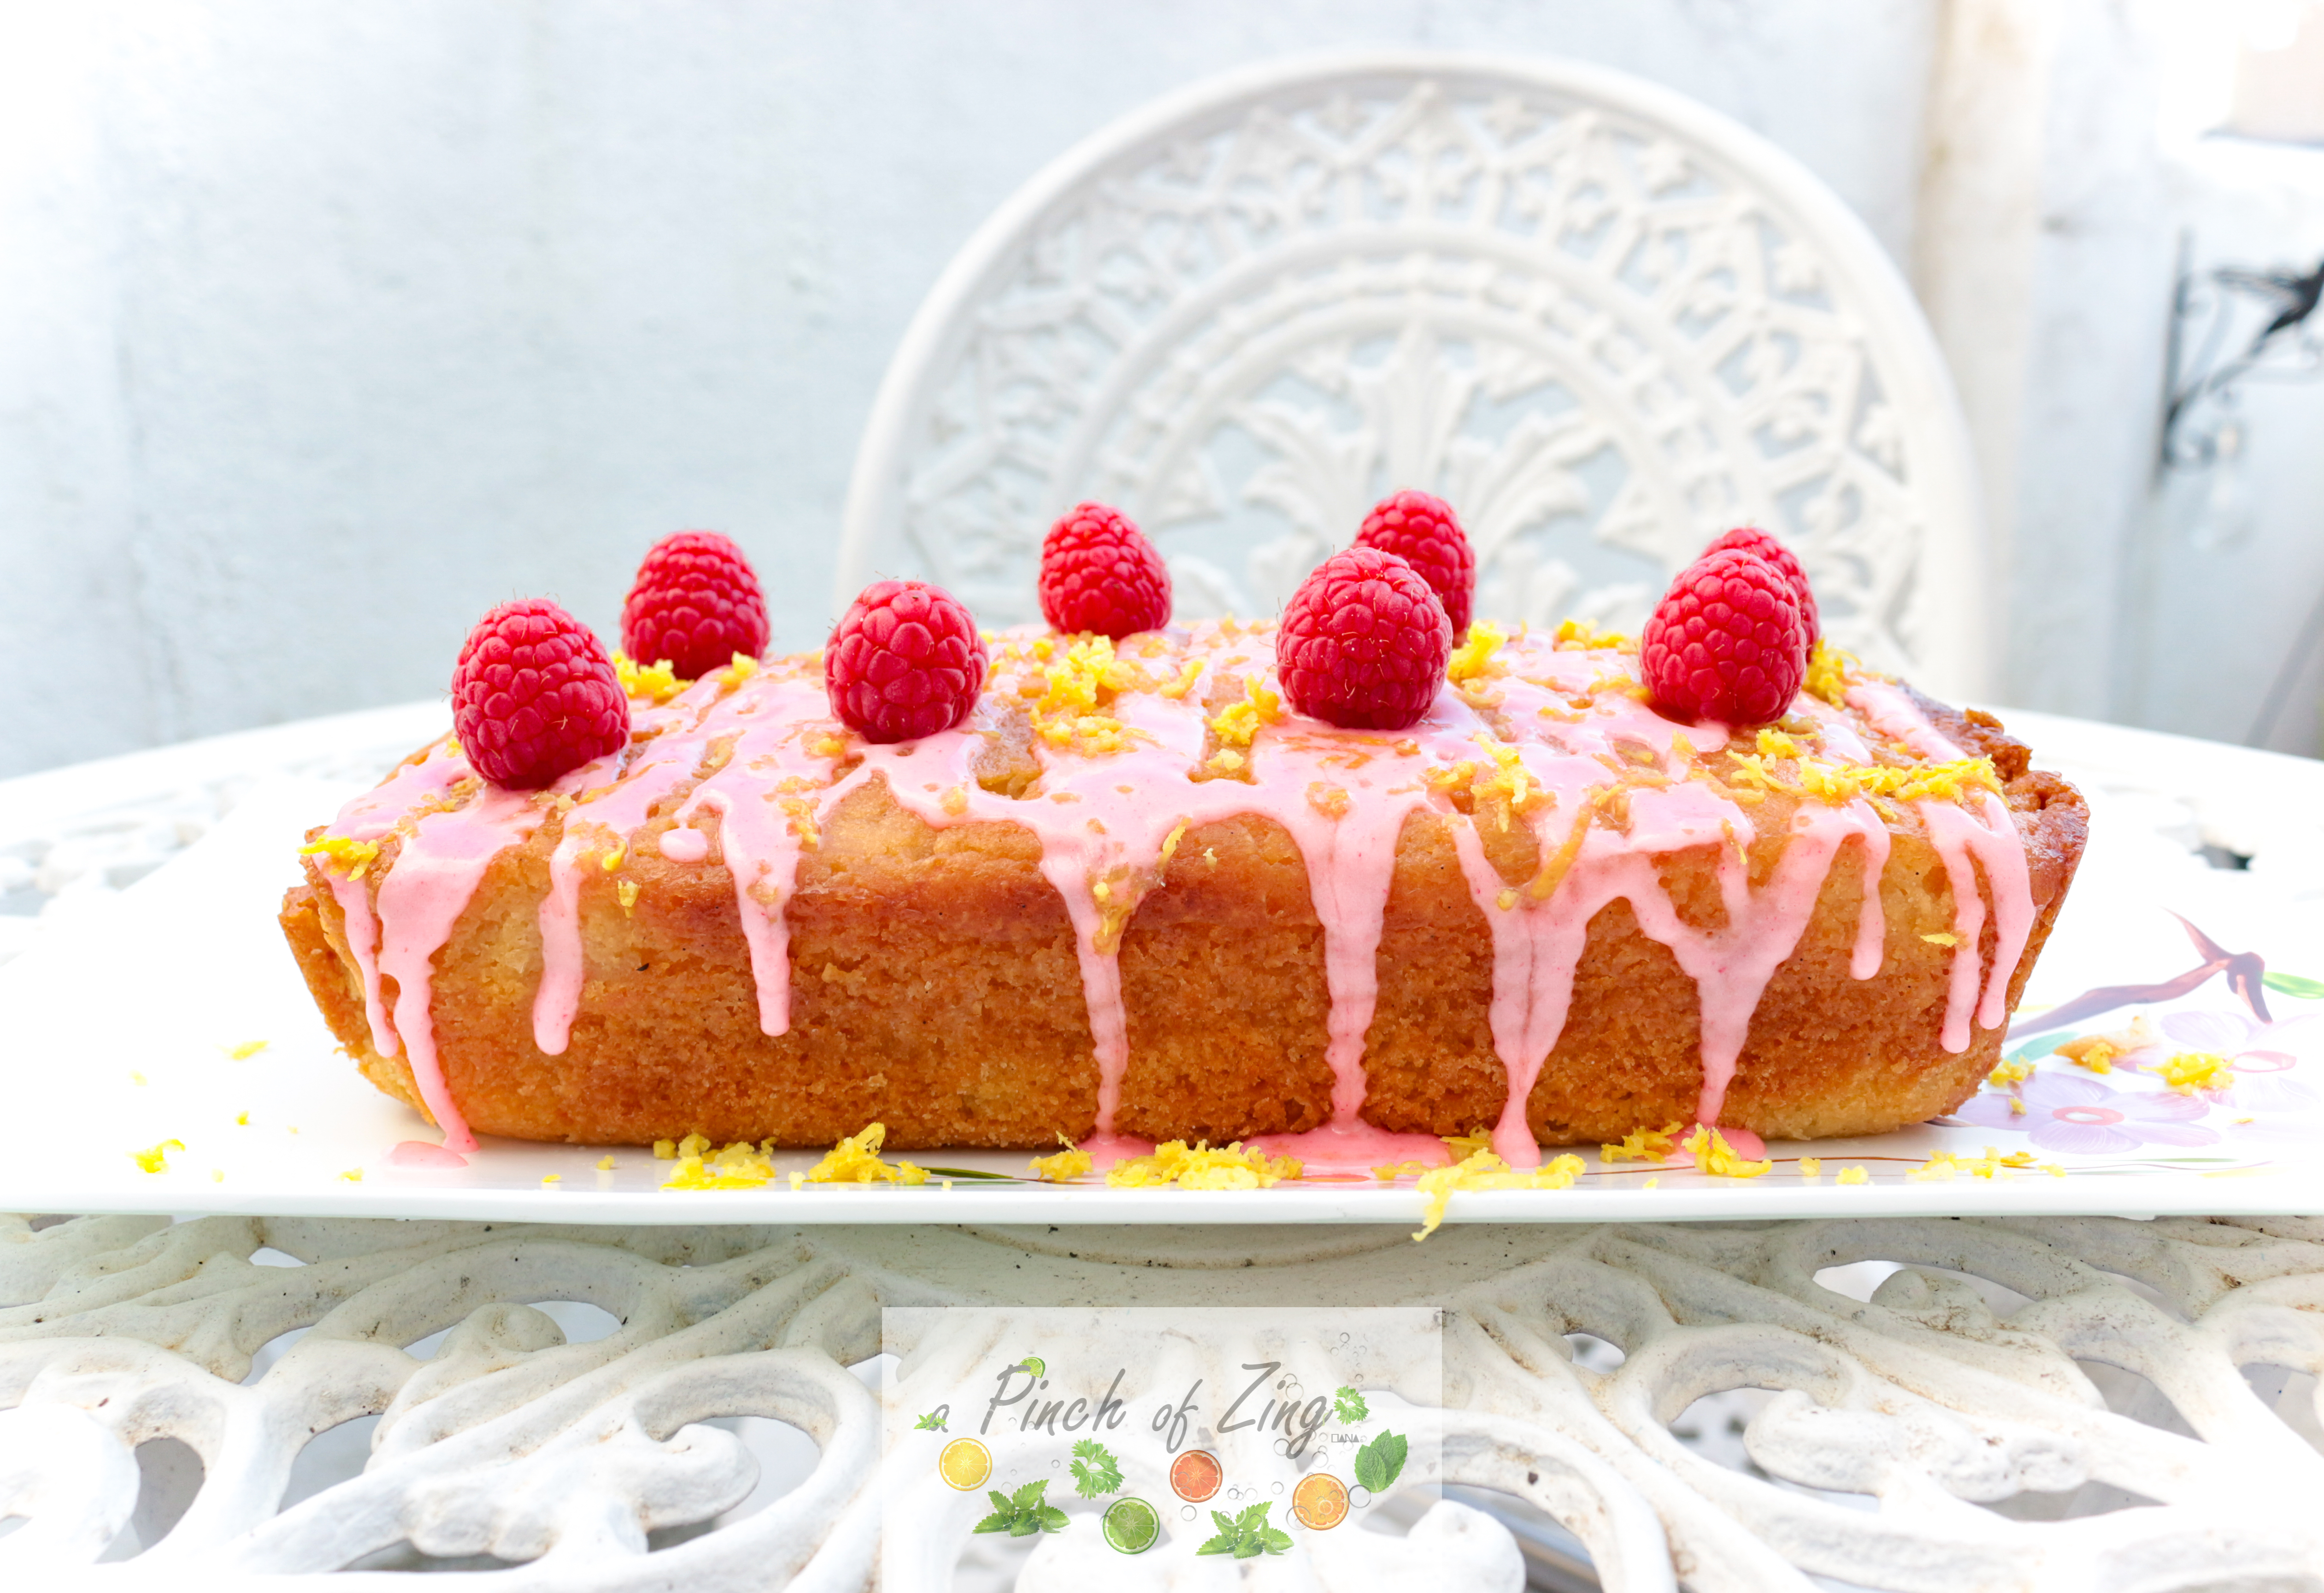 Vegan lemon drizzle cake with raspberries